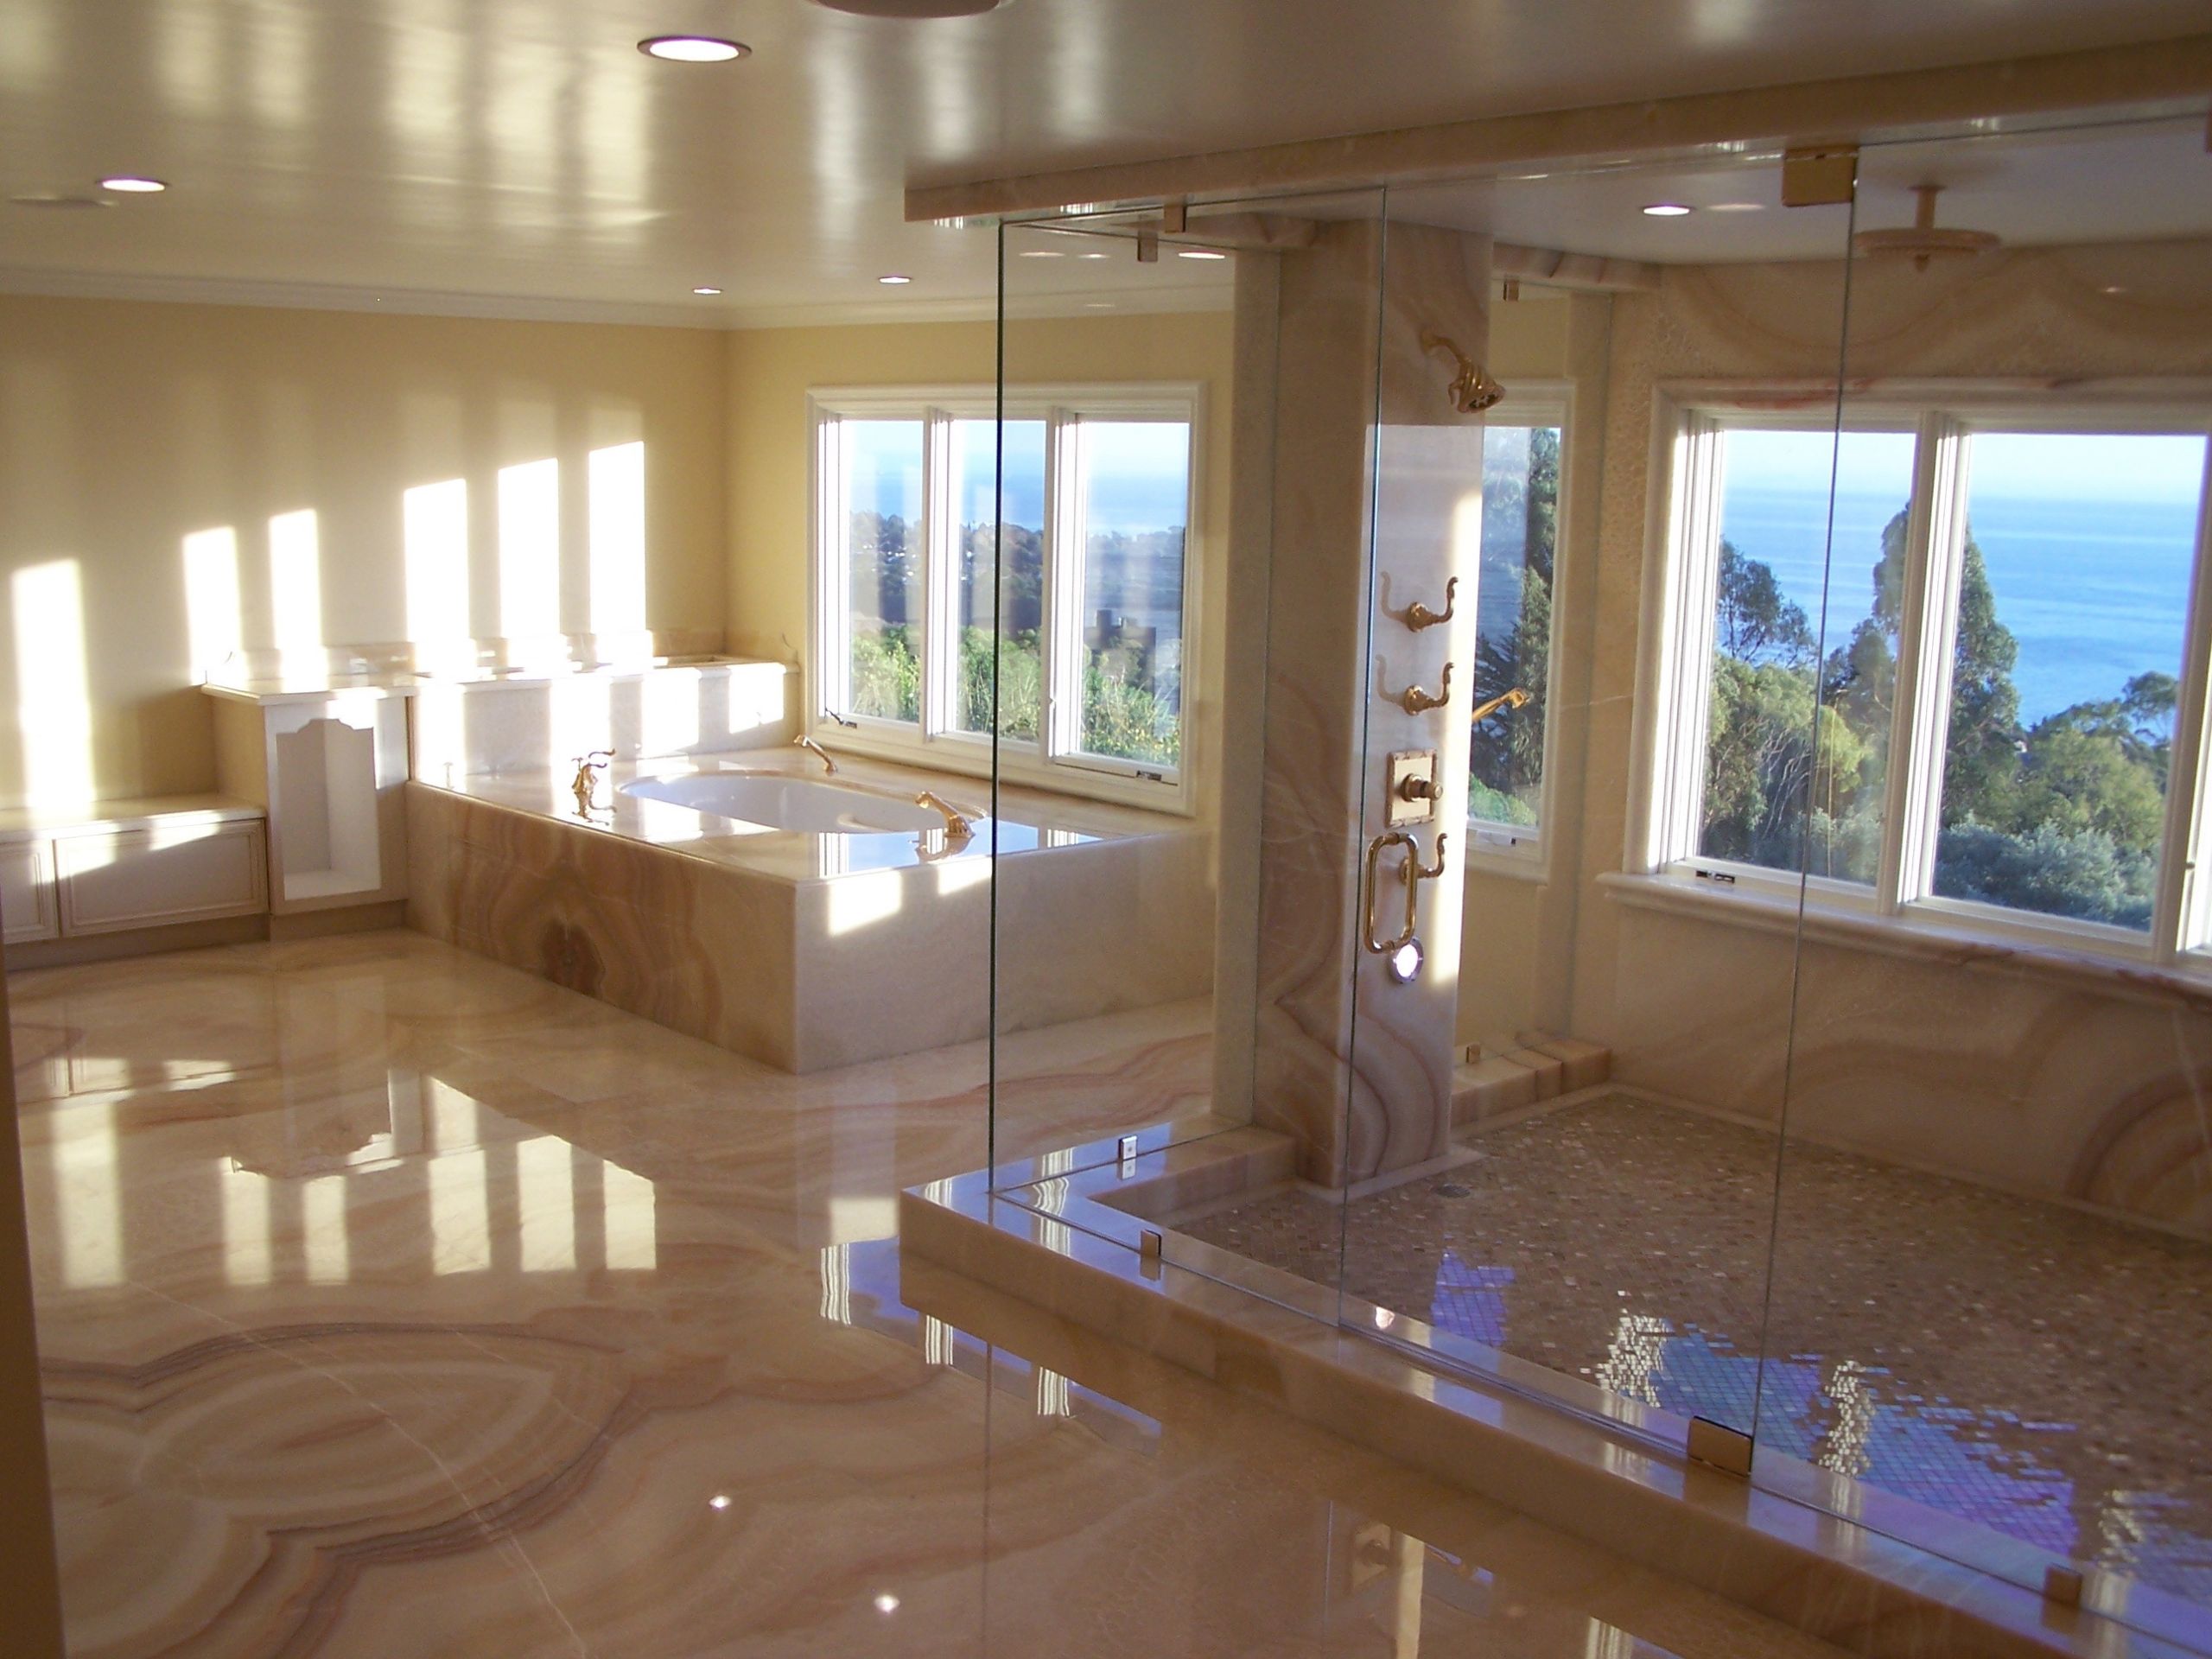 Luxury Bathroom Designs
 Luxury Bathrooms Hampton & Harlow